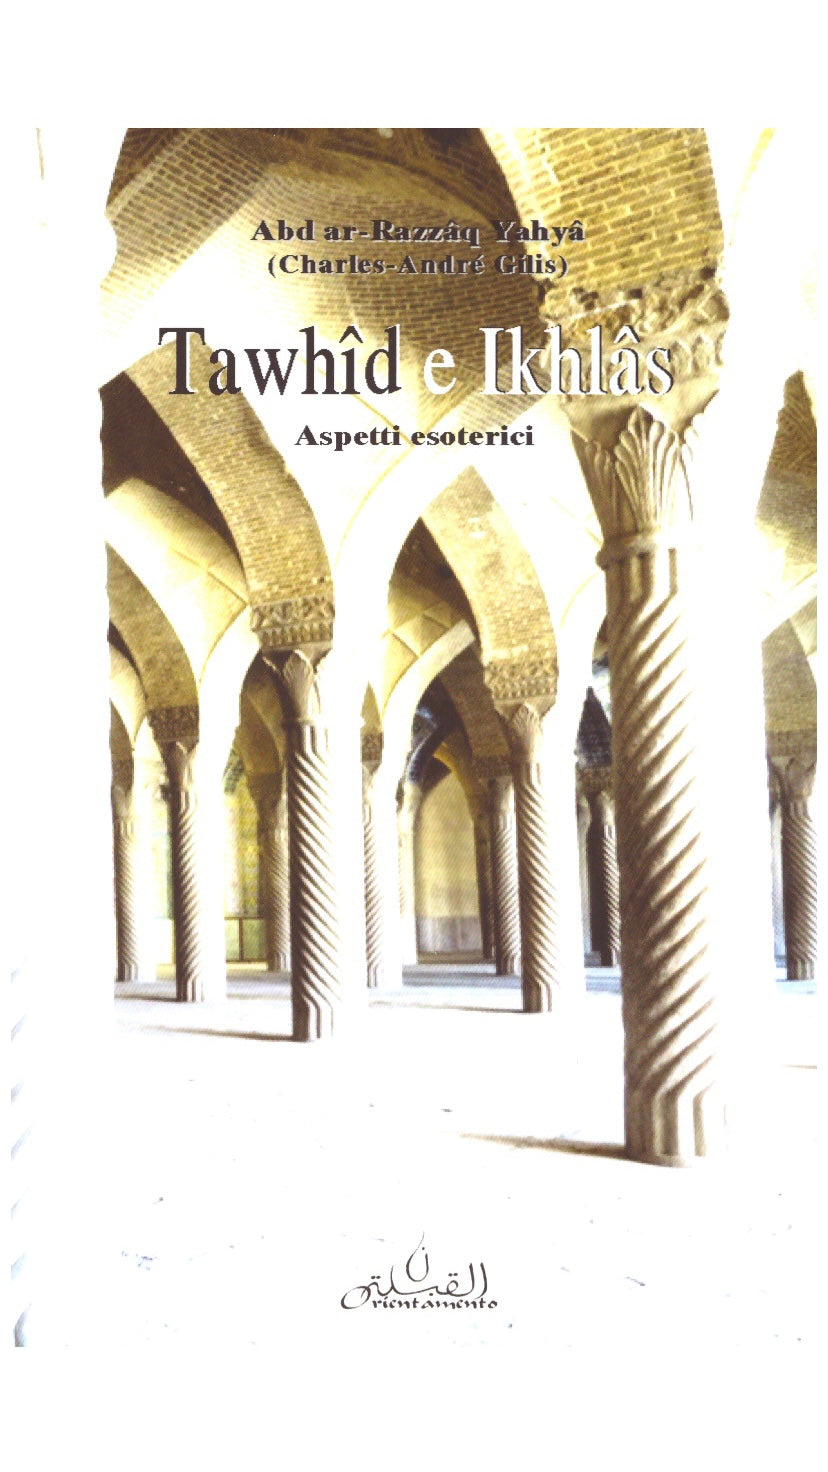 Tawhîd e Ikhlâs - Hijab Paradise - abd ar razzaq yahya - charles andre gilis - aspetti esoterici